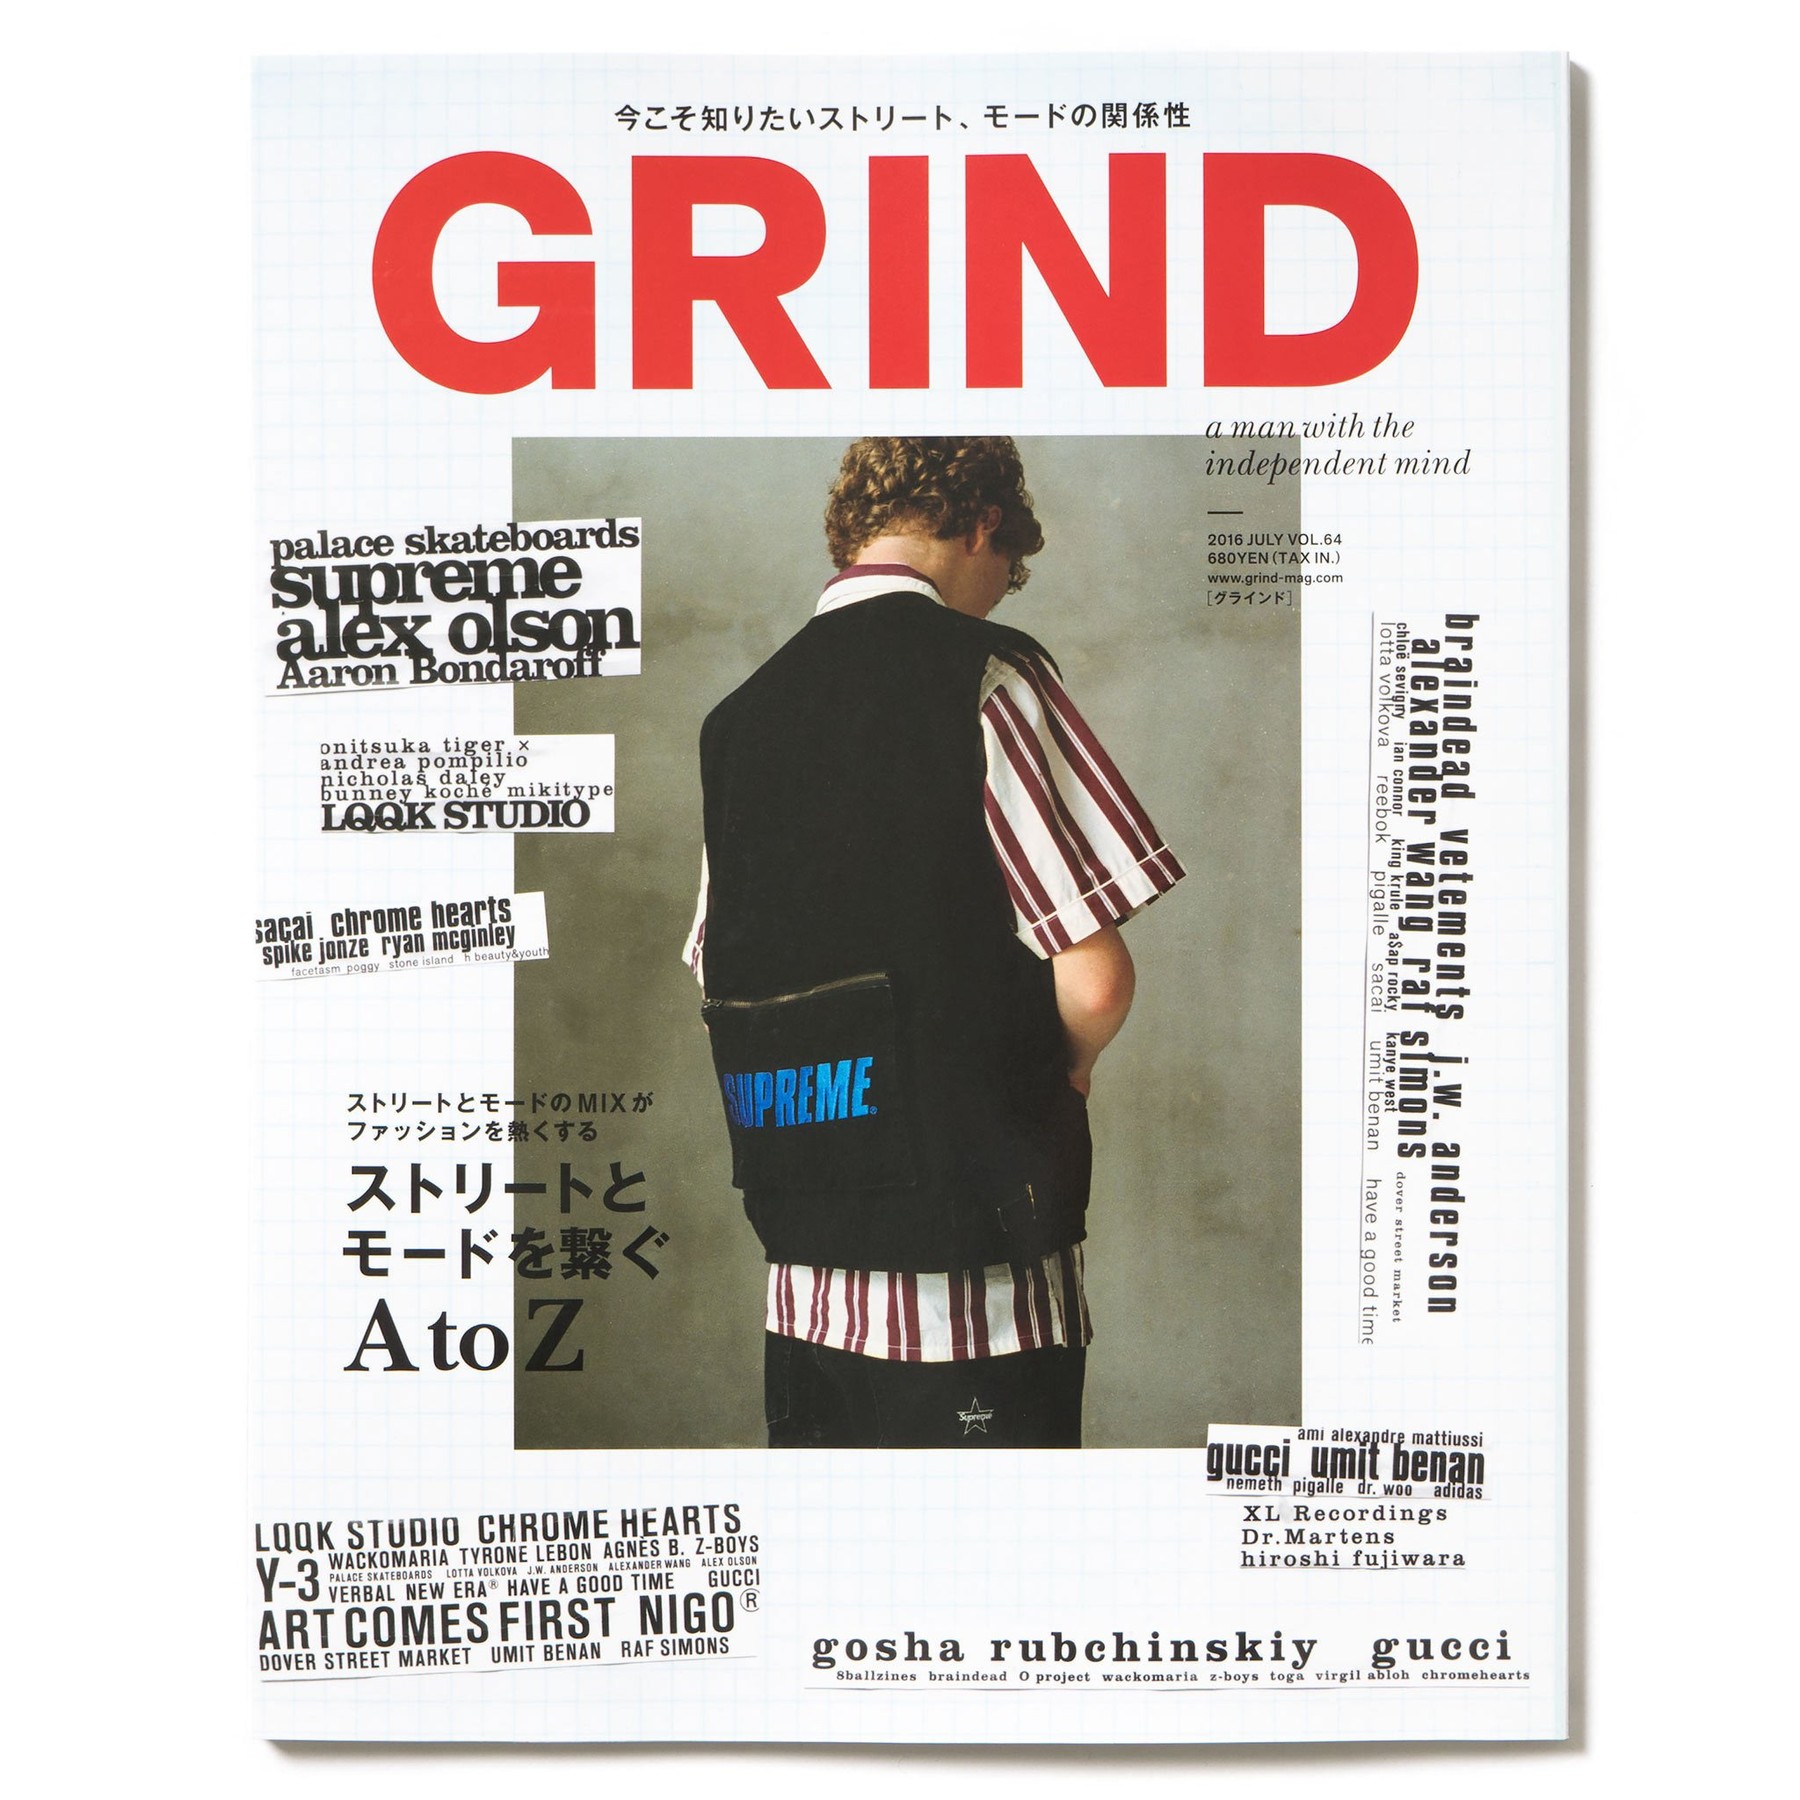 grind-magazine-2016-july-vol64-1_8febf842-4d28-486d-8a21-3cad0369dfa9_2048x2048.jpg